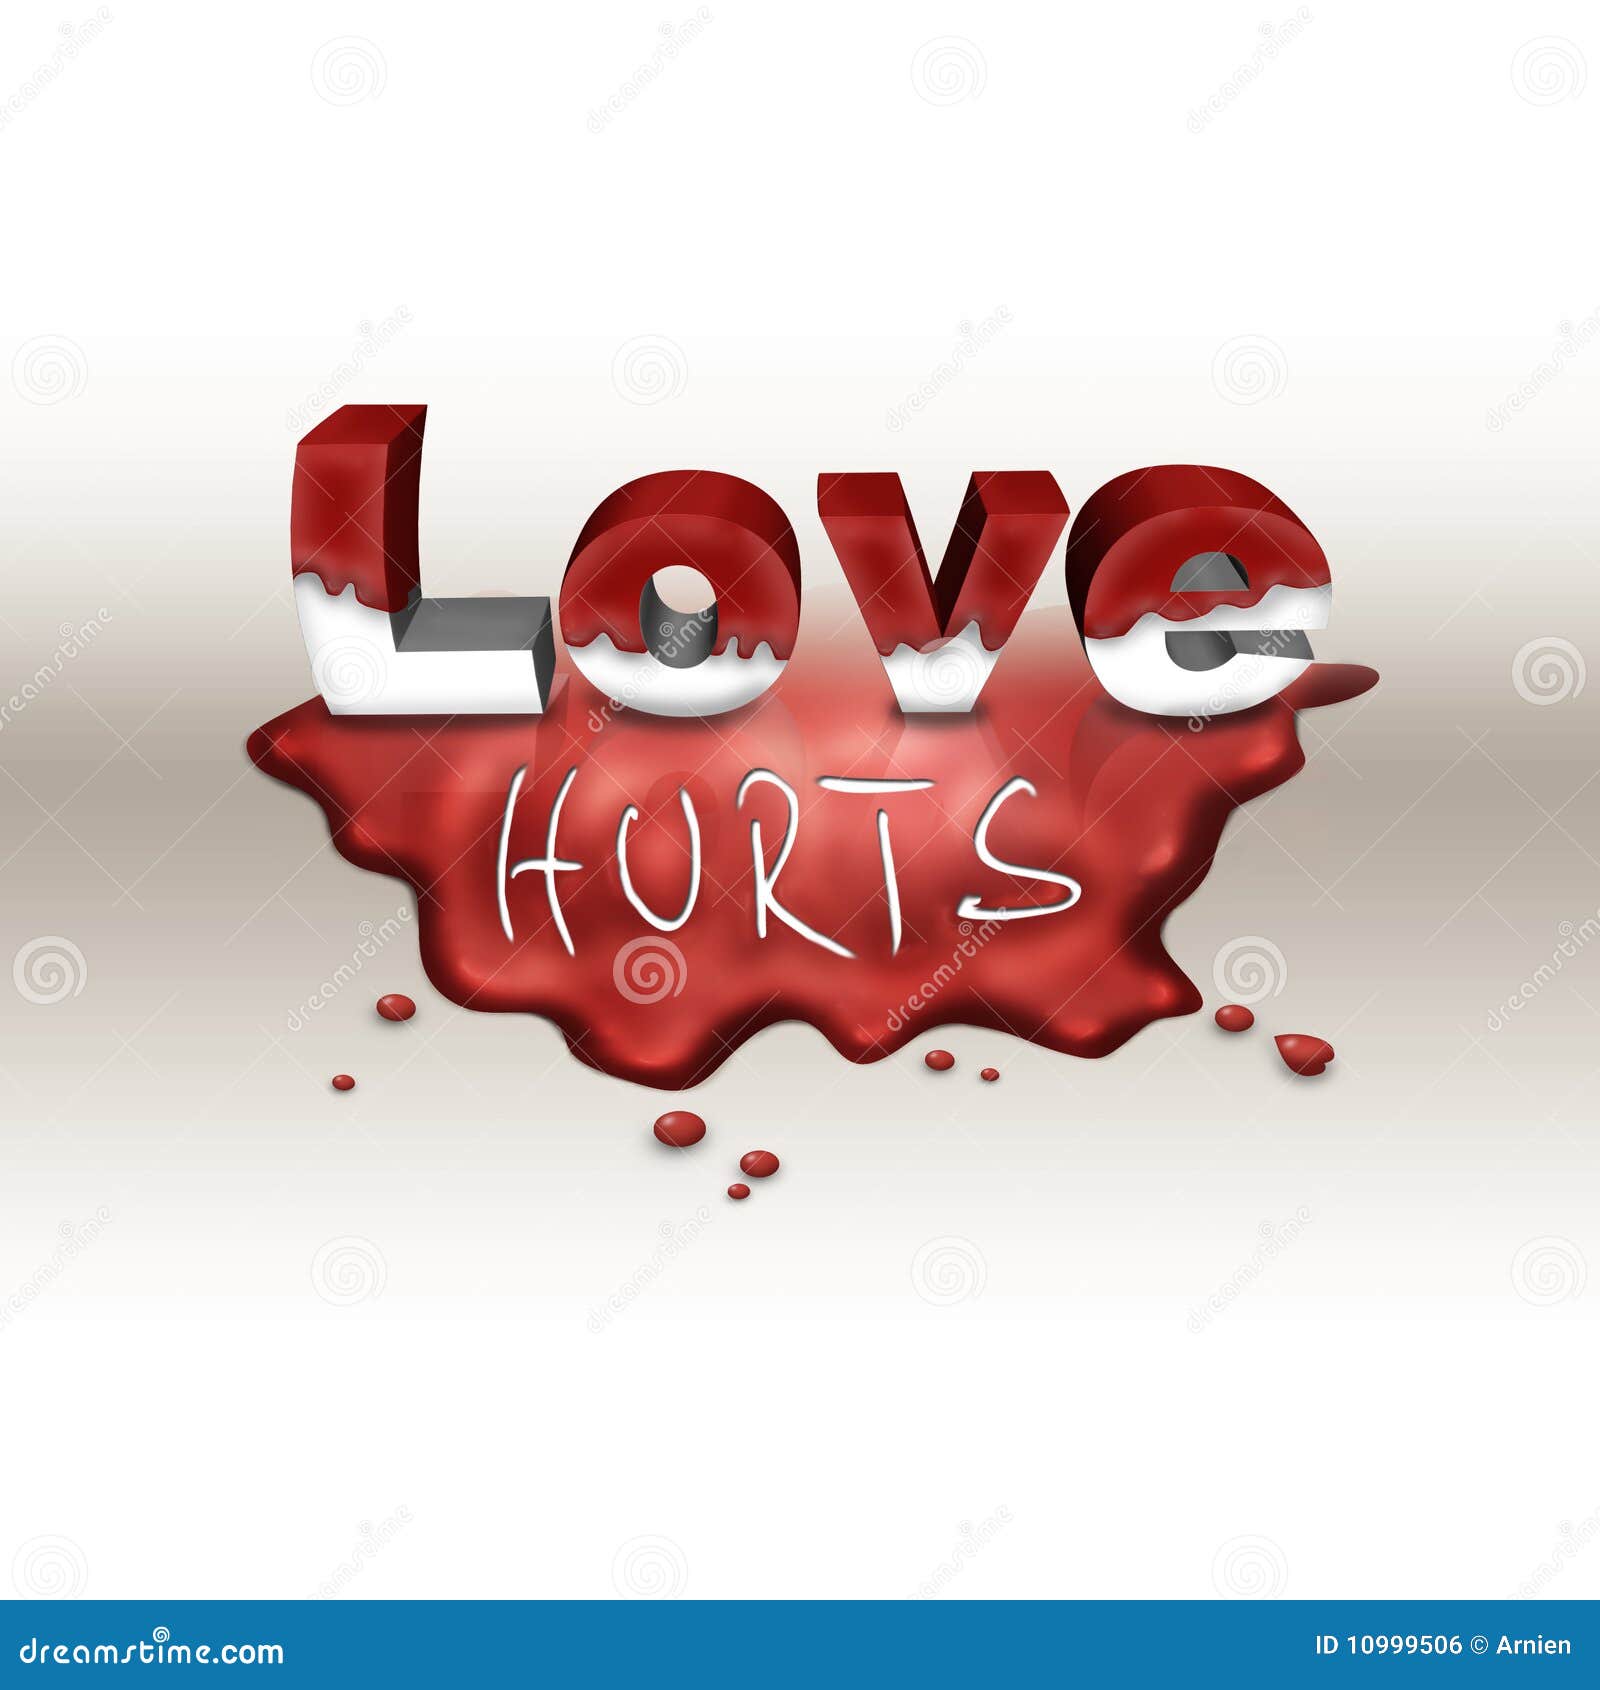 Love hurts background stock illustration. Illustration of heart ...